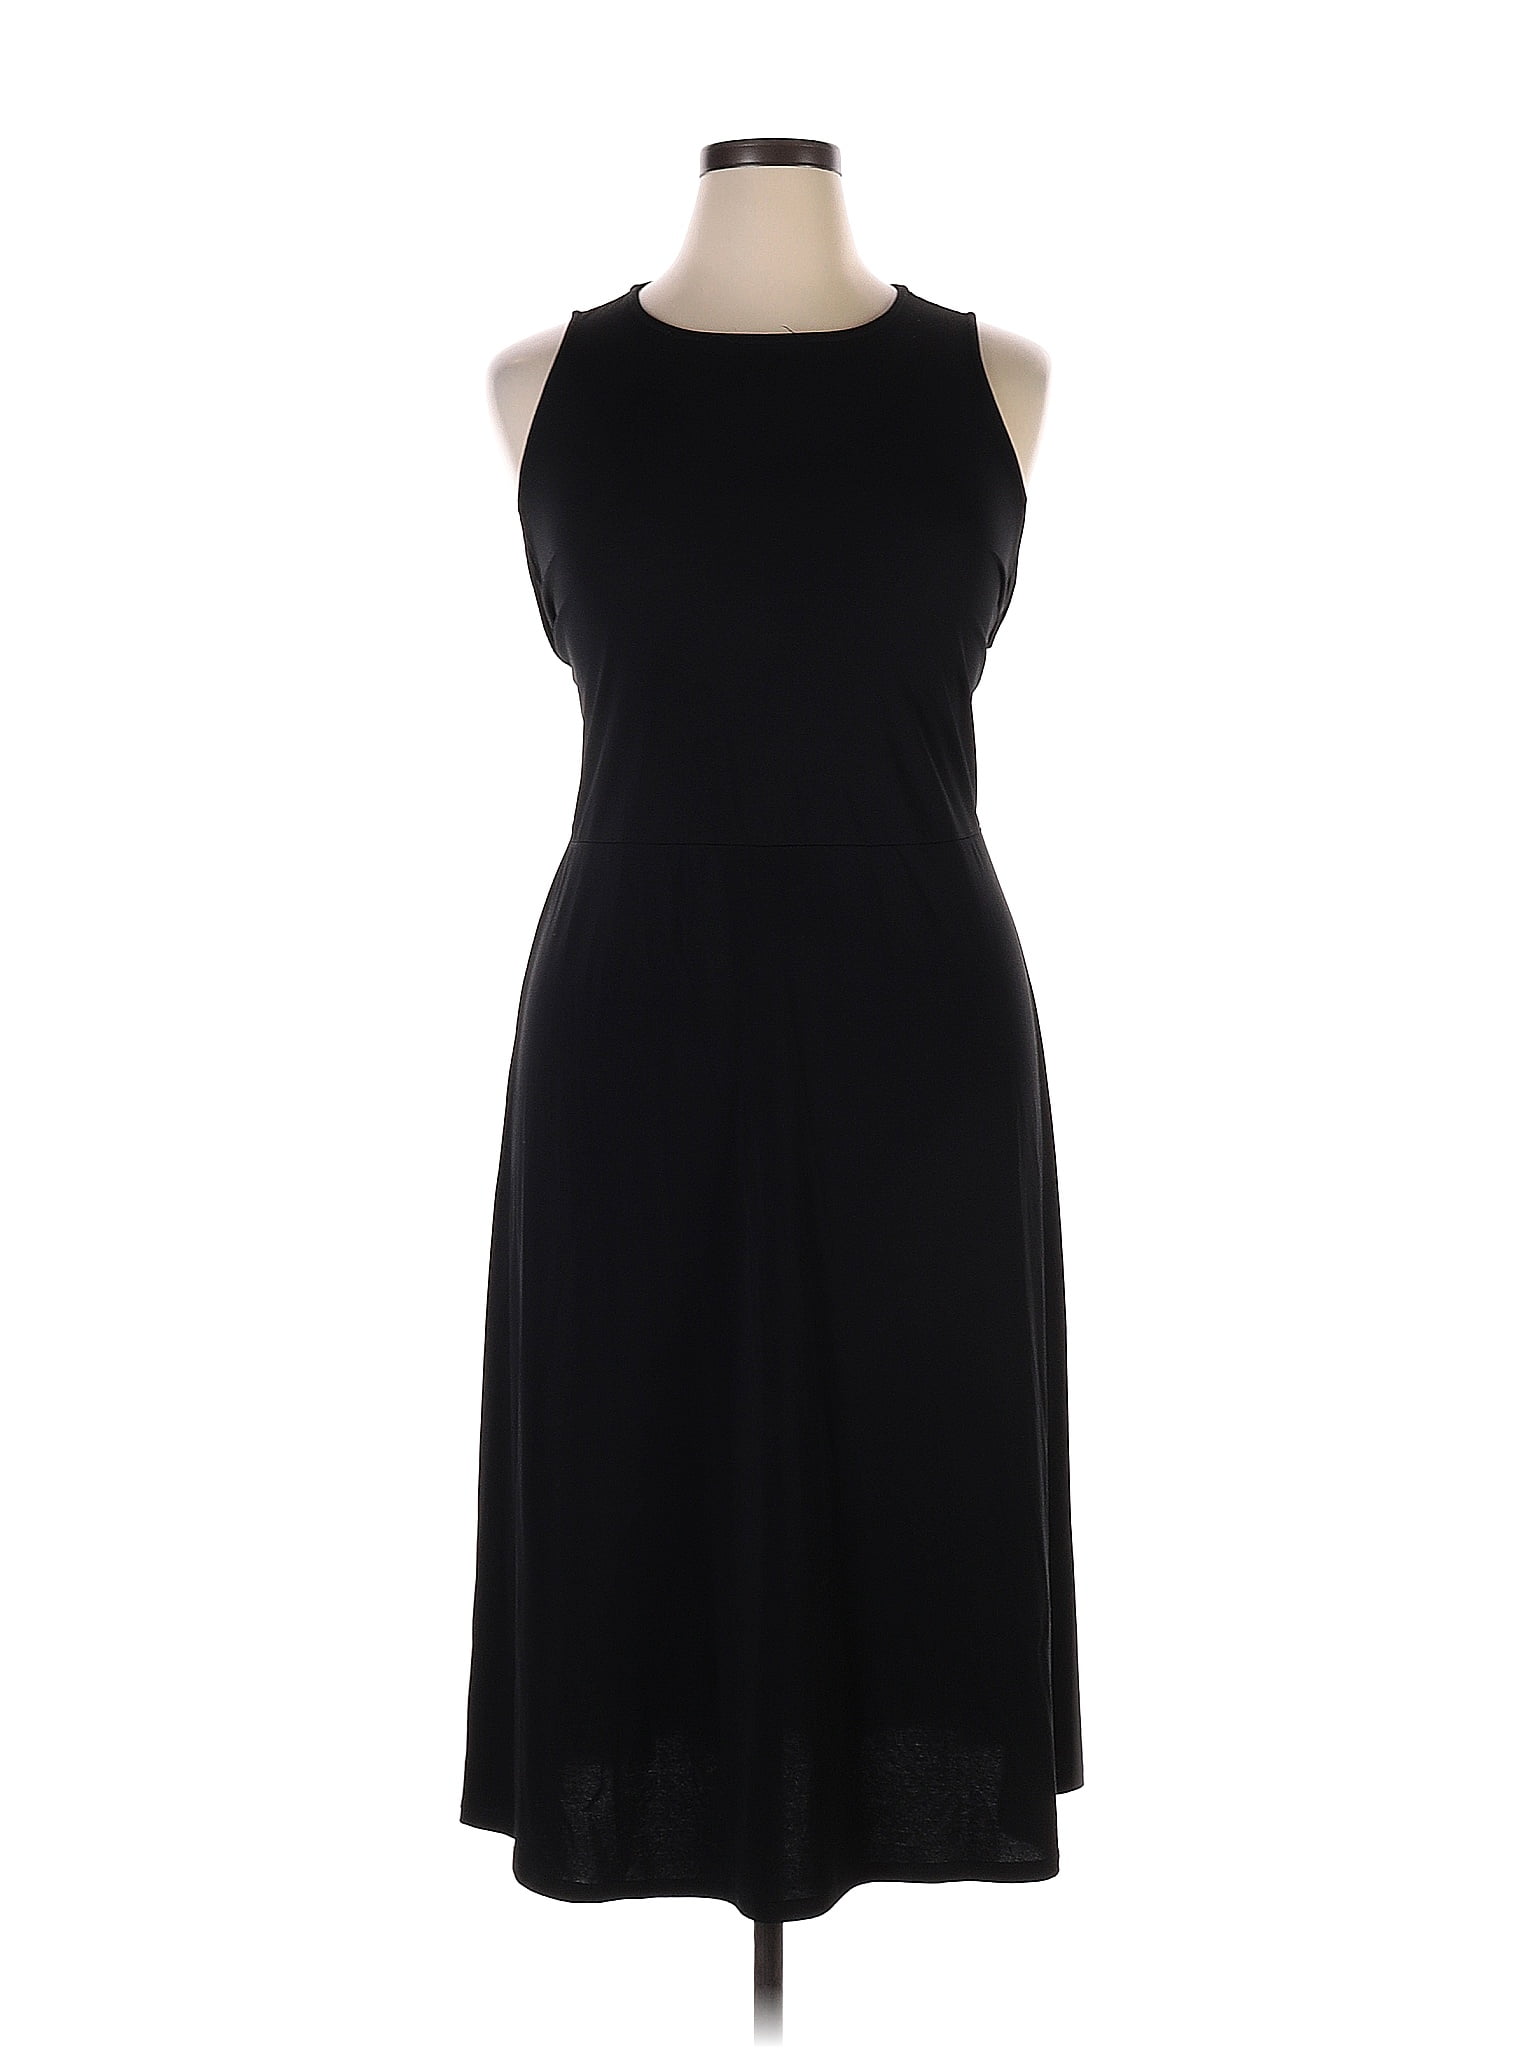 ELOQUII Solid Black Casual Dress Size 14 (Plus) - 72% off | thredUP